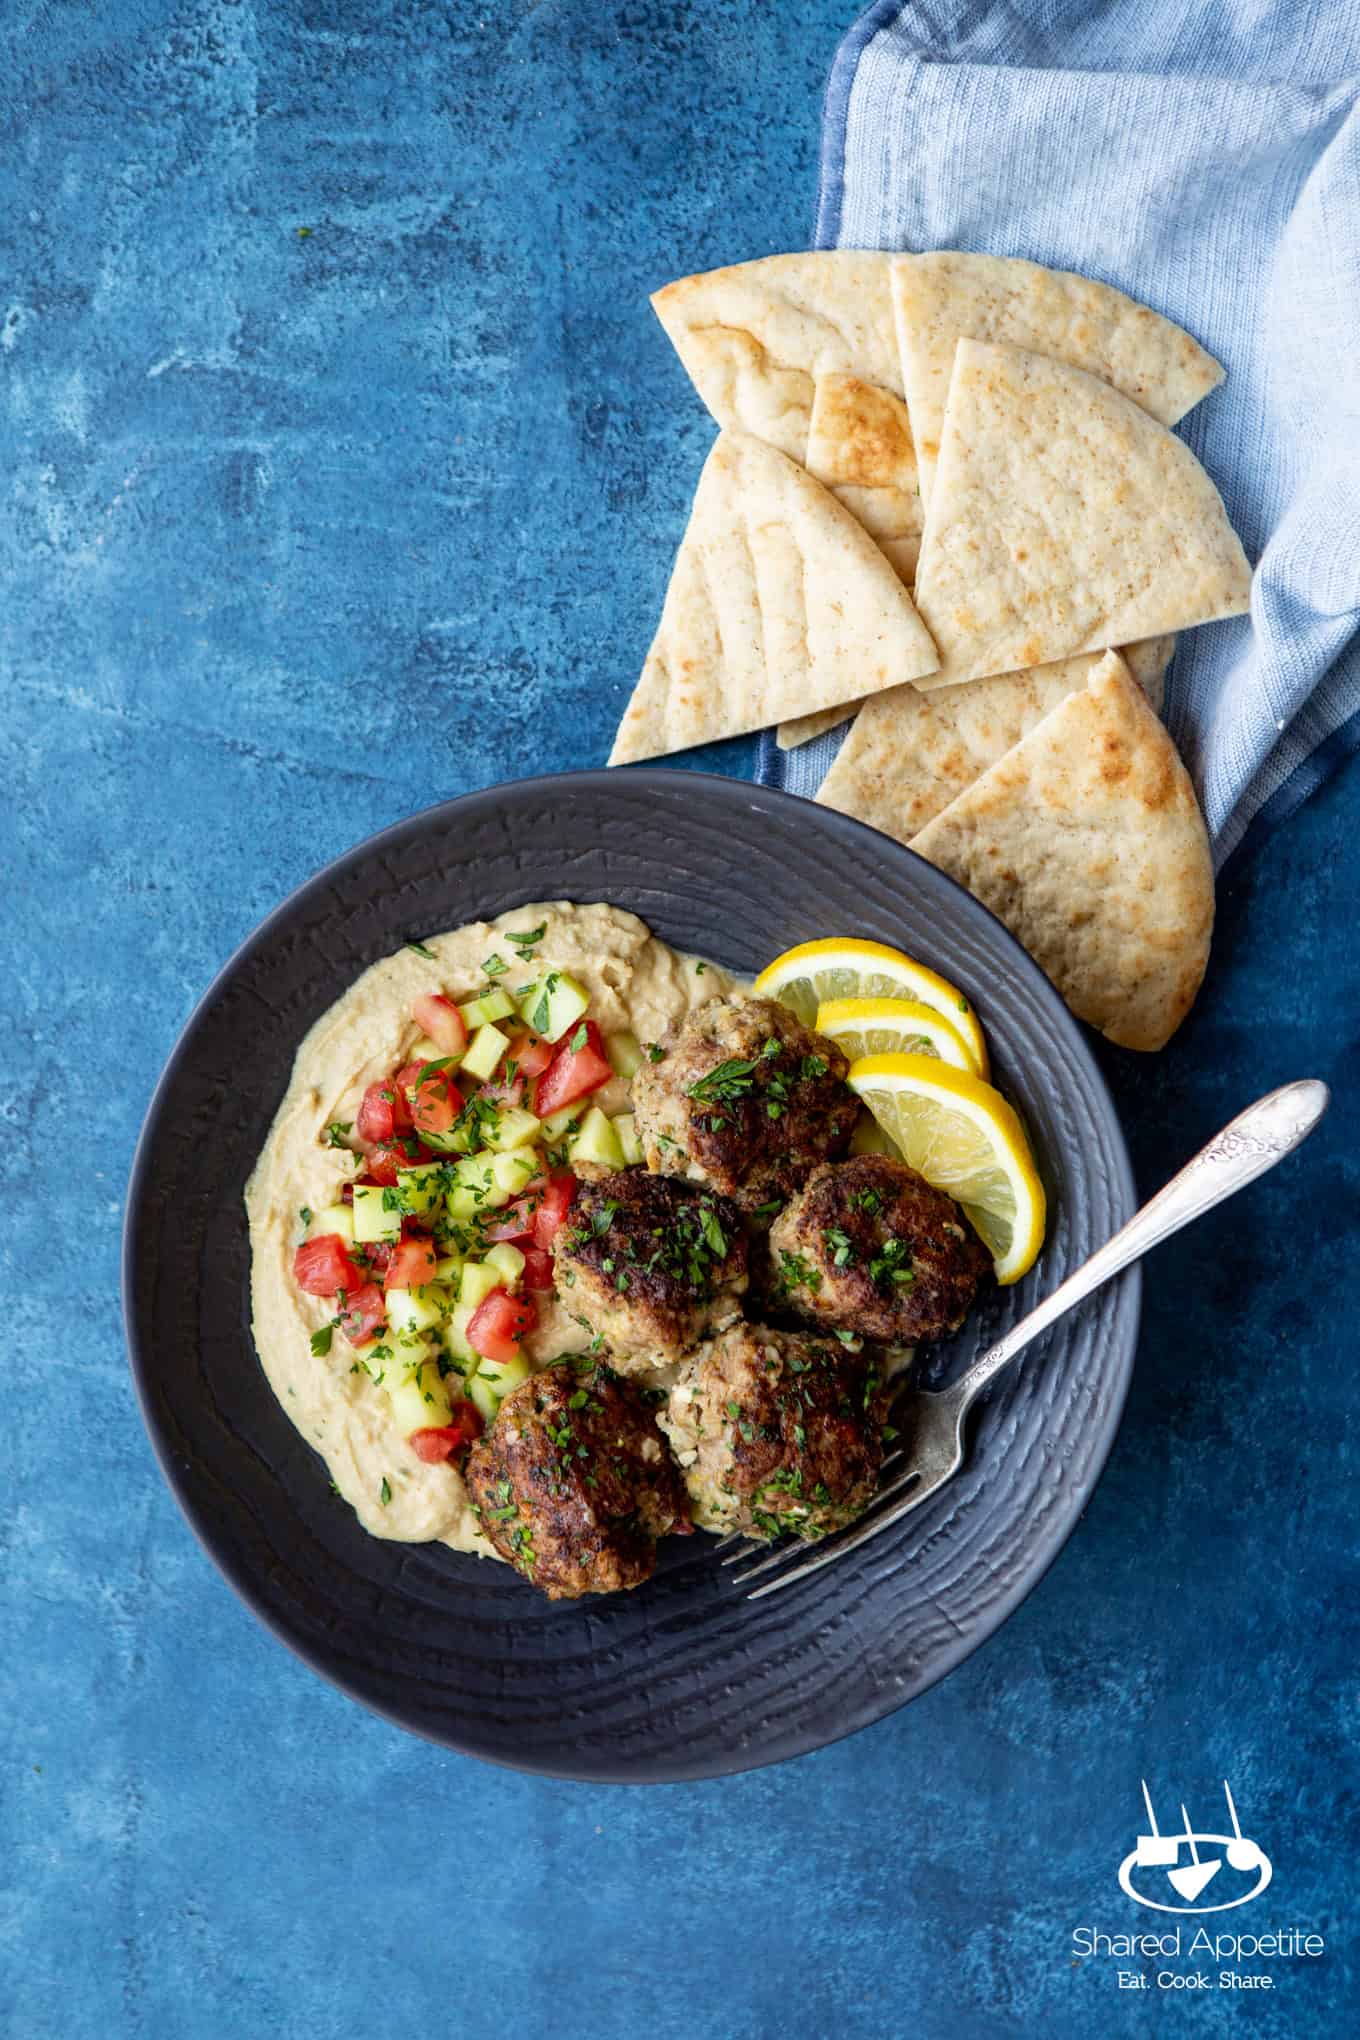 Greek Chicken Meatballs with Hummus and Israeli Salad | sharedappetite.com